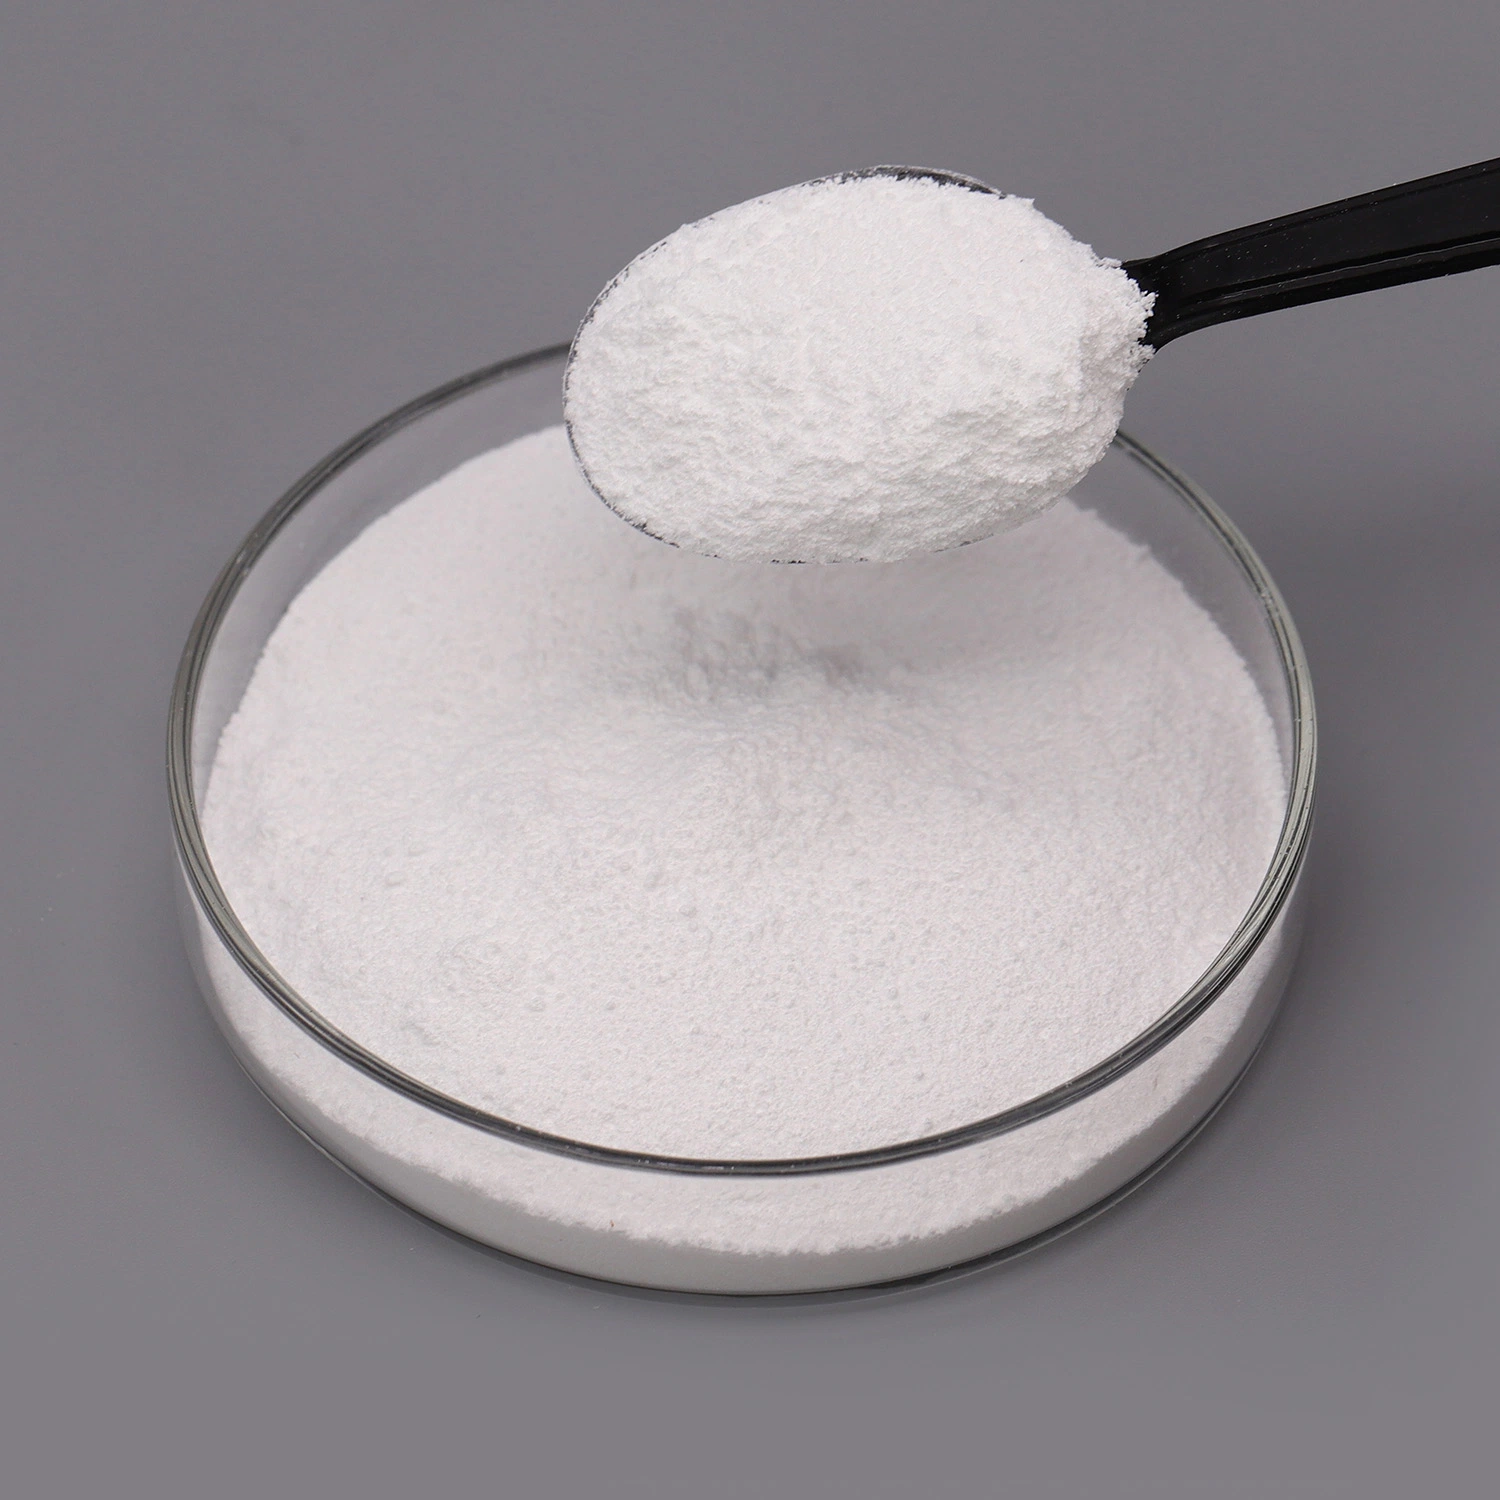 Natural Organic Raw Material Chemicals Product Sodium Benzene Powder